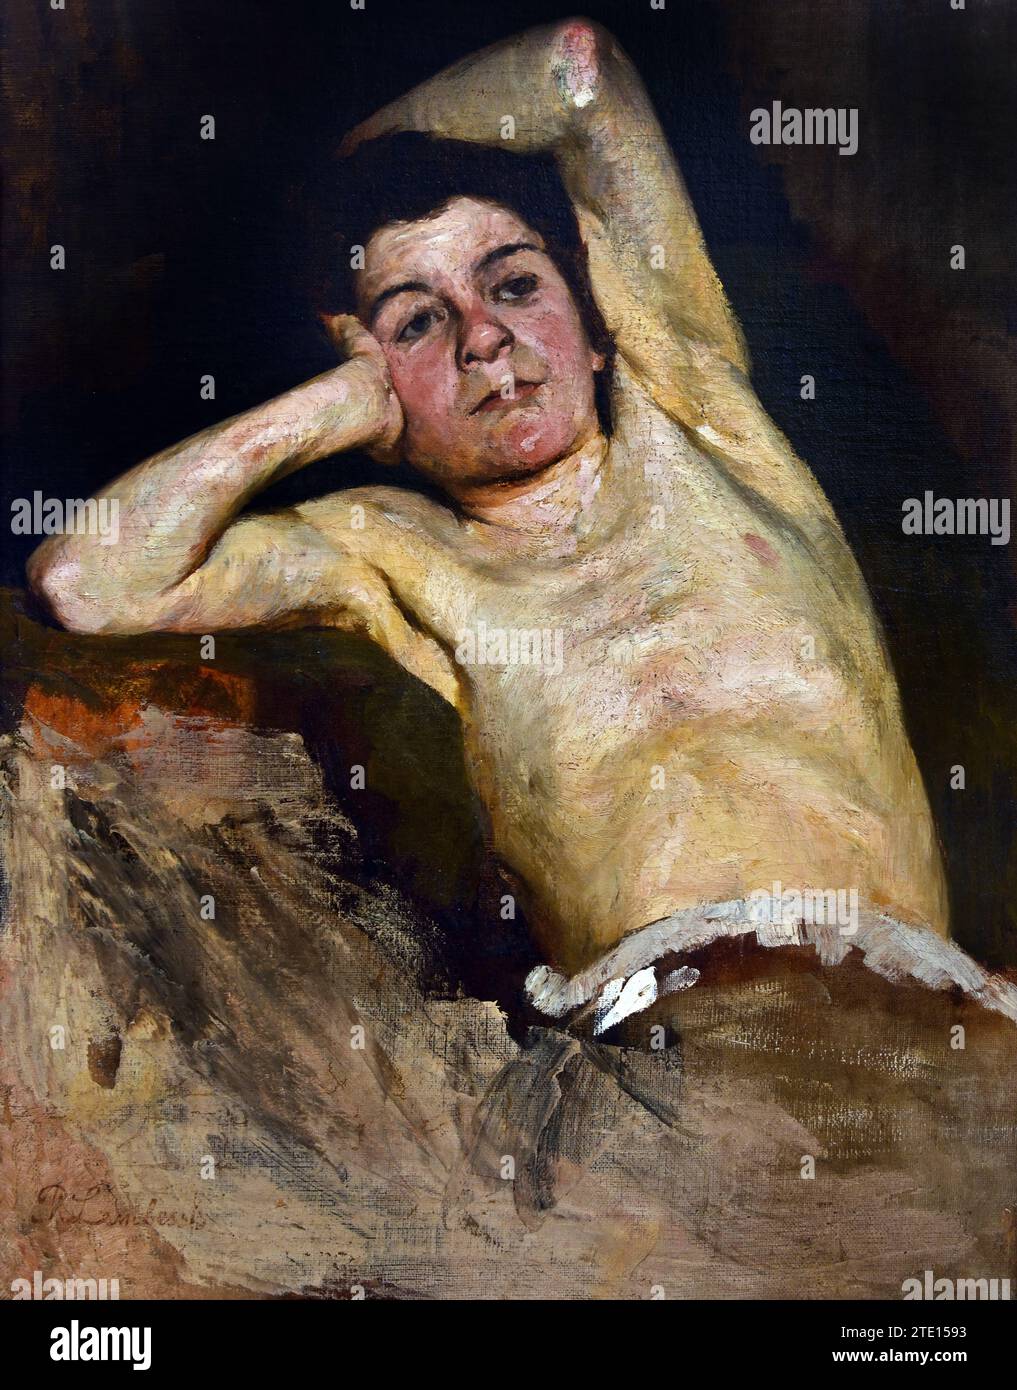 Lembesis Polychronis (1848 - 1913) Semi-clad Boy, Painting 19ty-20th Century, National Gallery, Athens, Greece. Stock Photo